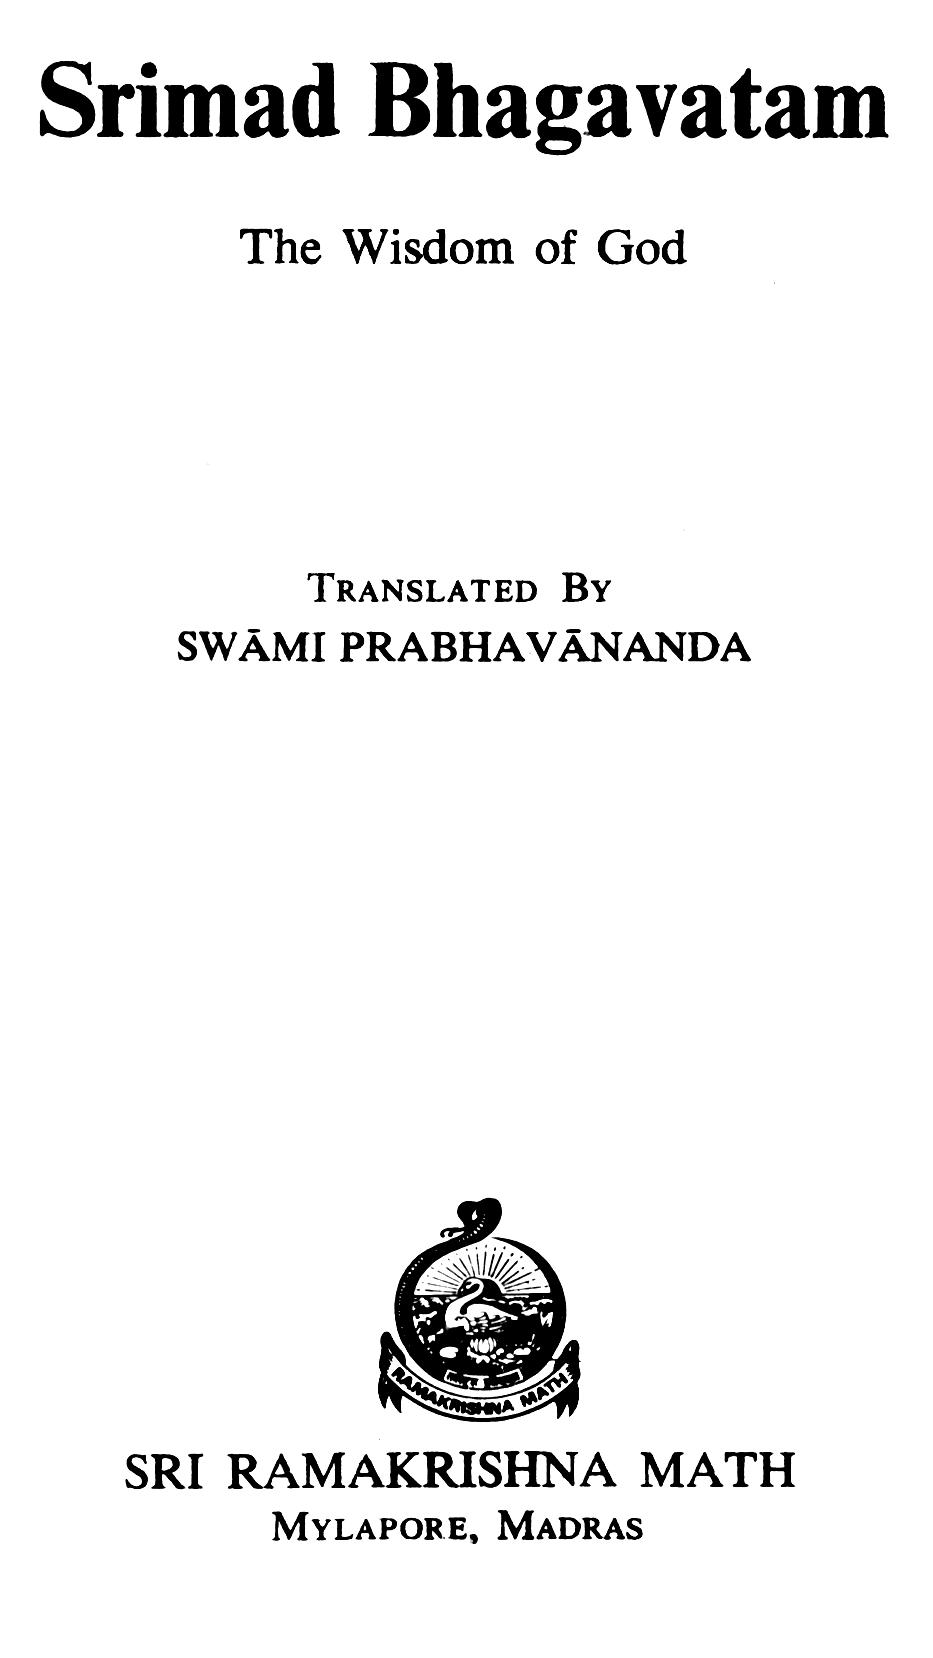 Srimad Bhagavatam - The Wisdom of God